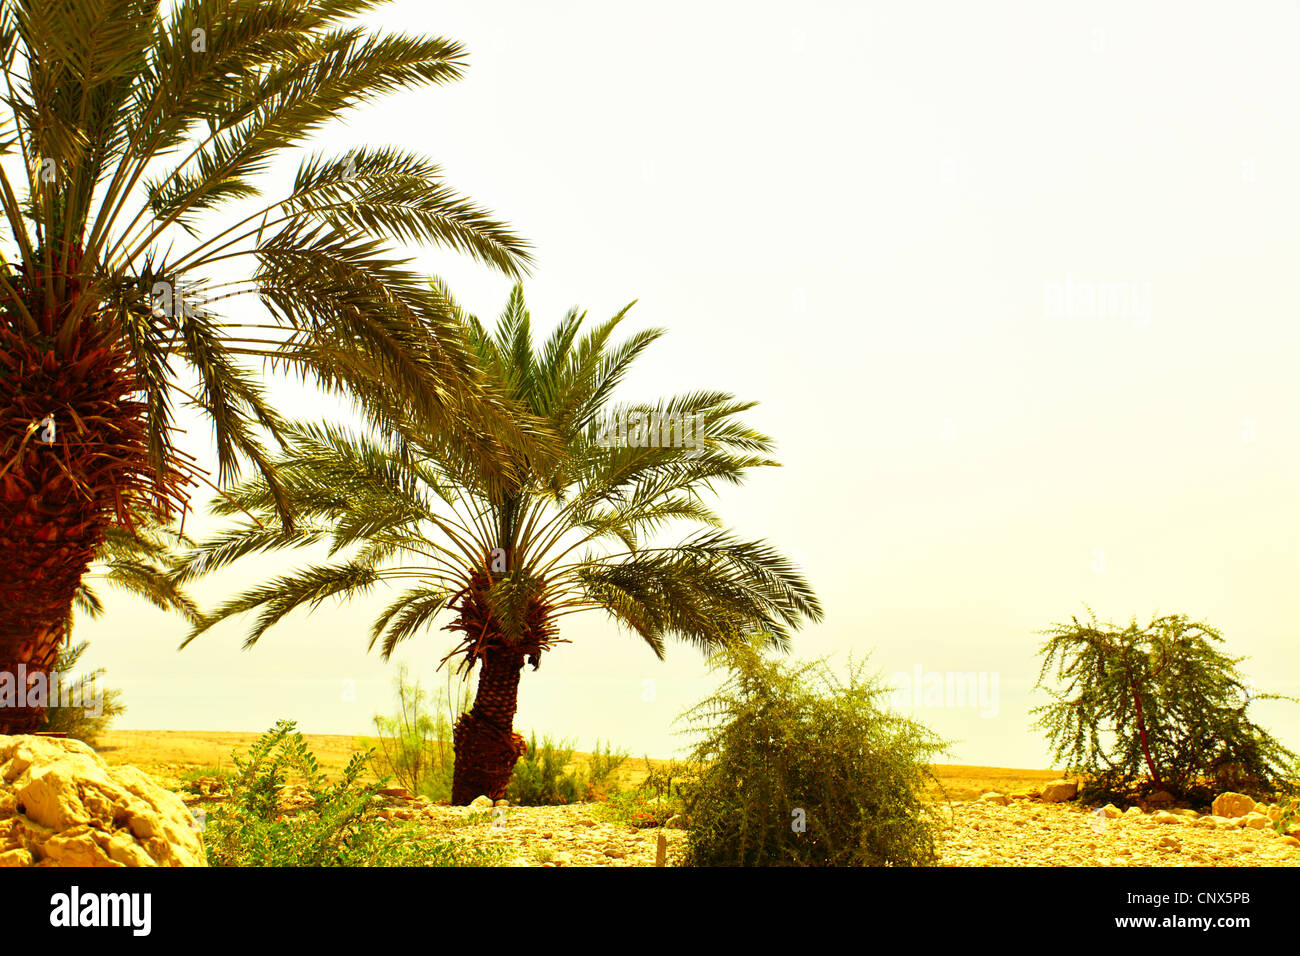 Date palms and stones, Arava desert, Israel Stock Photo